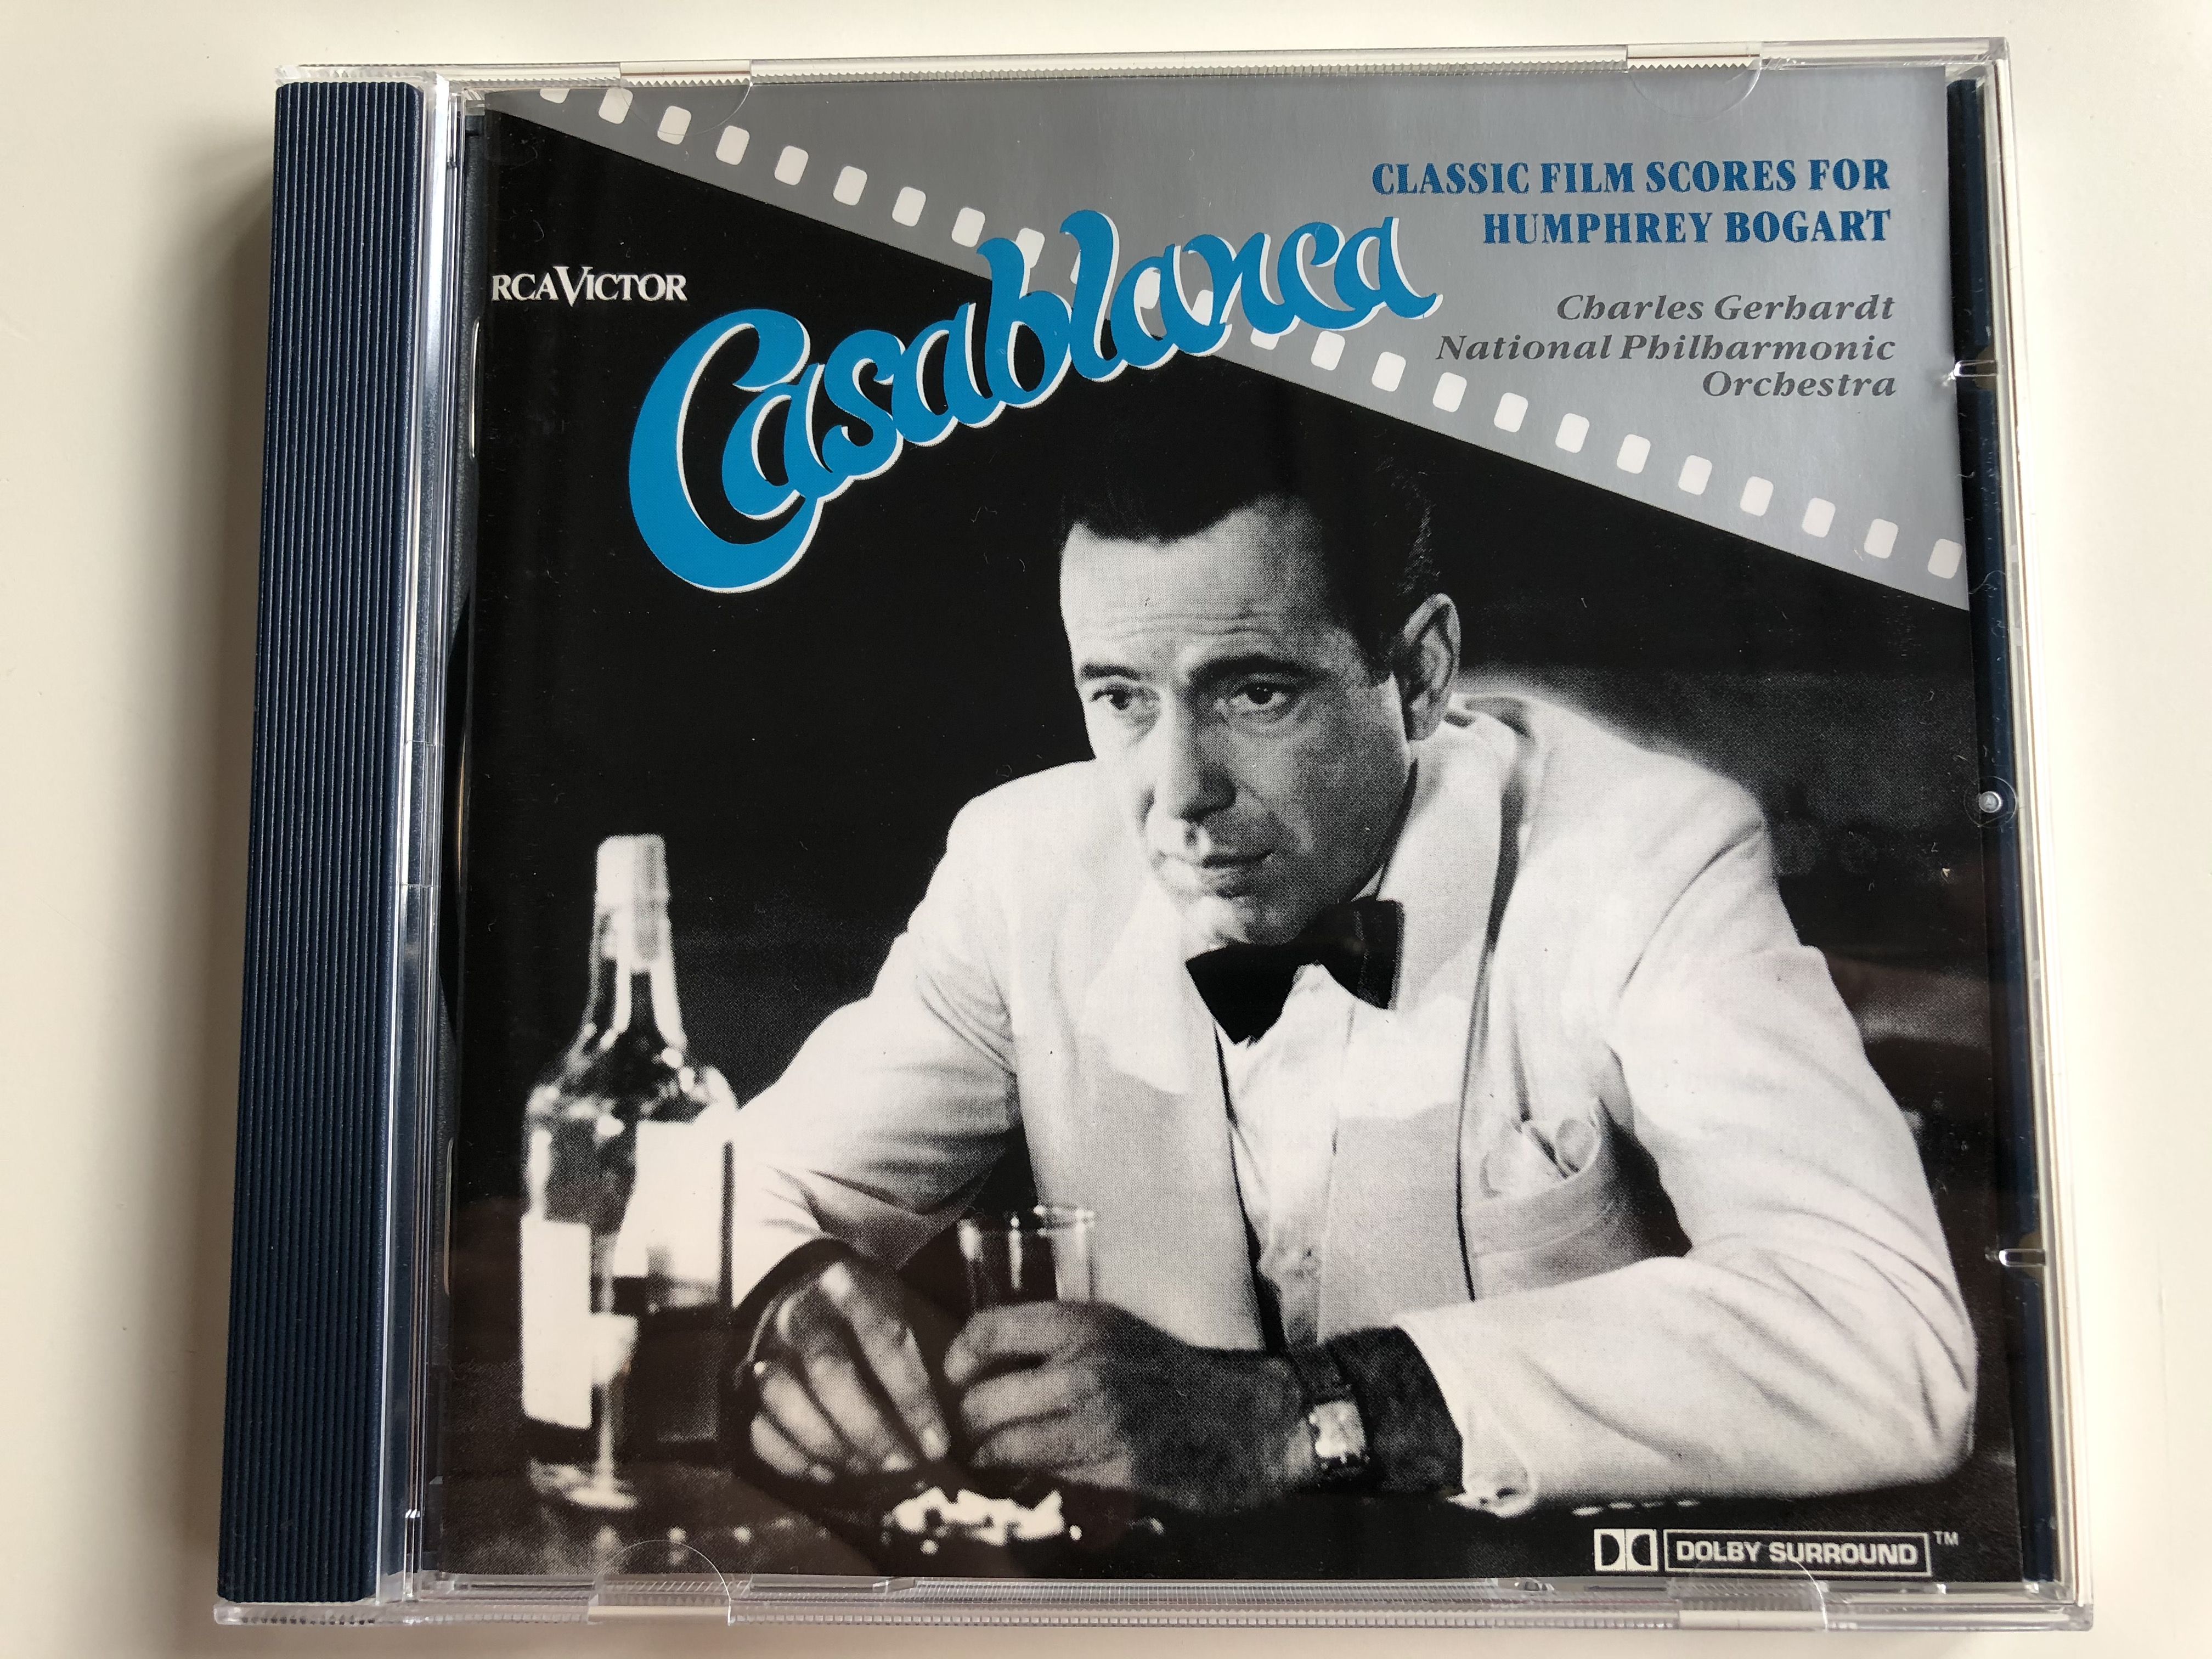 casablanca-classic-film-scores-for-humphrey-bogart-charles-gerhardt-national-philharmonic-orchestra-rca-victor-audio-cd-gd-80422-1-.jpg